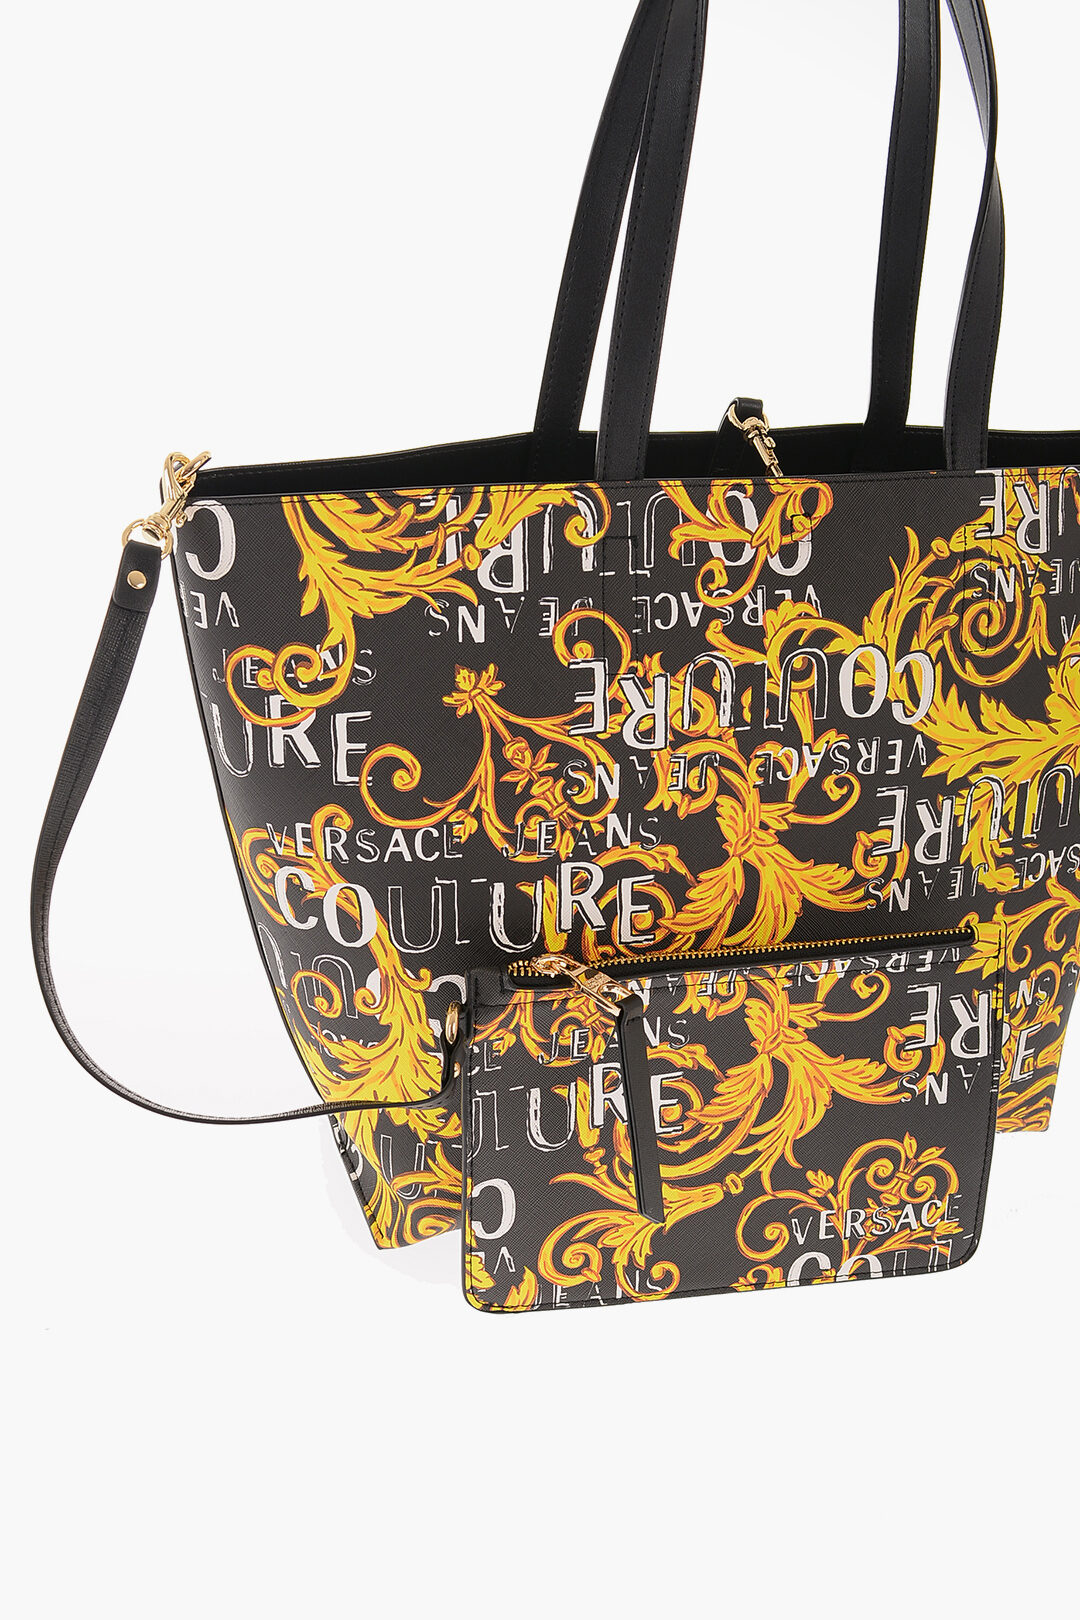 Versace Jeans Couture women Logo couture handbags black - gold